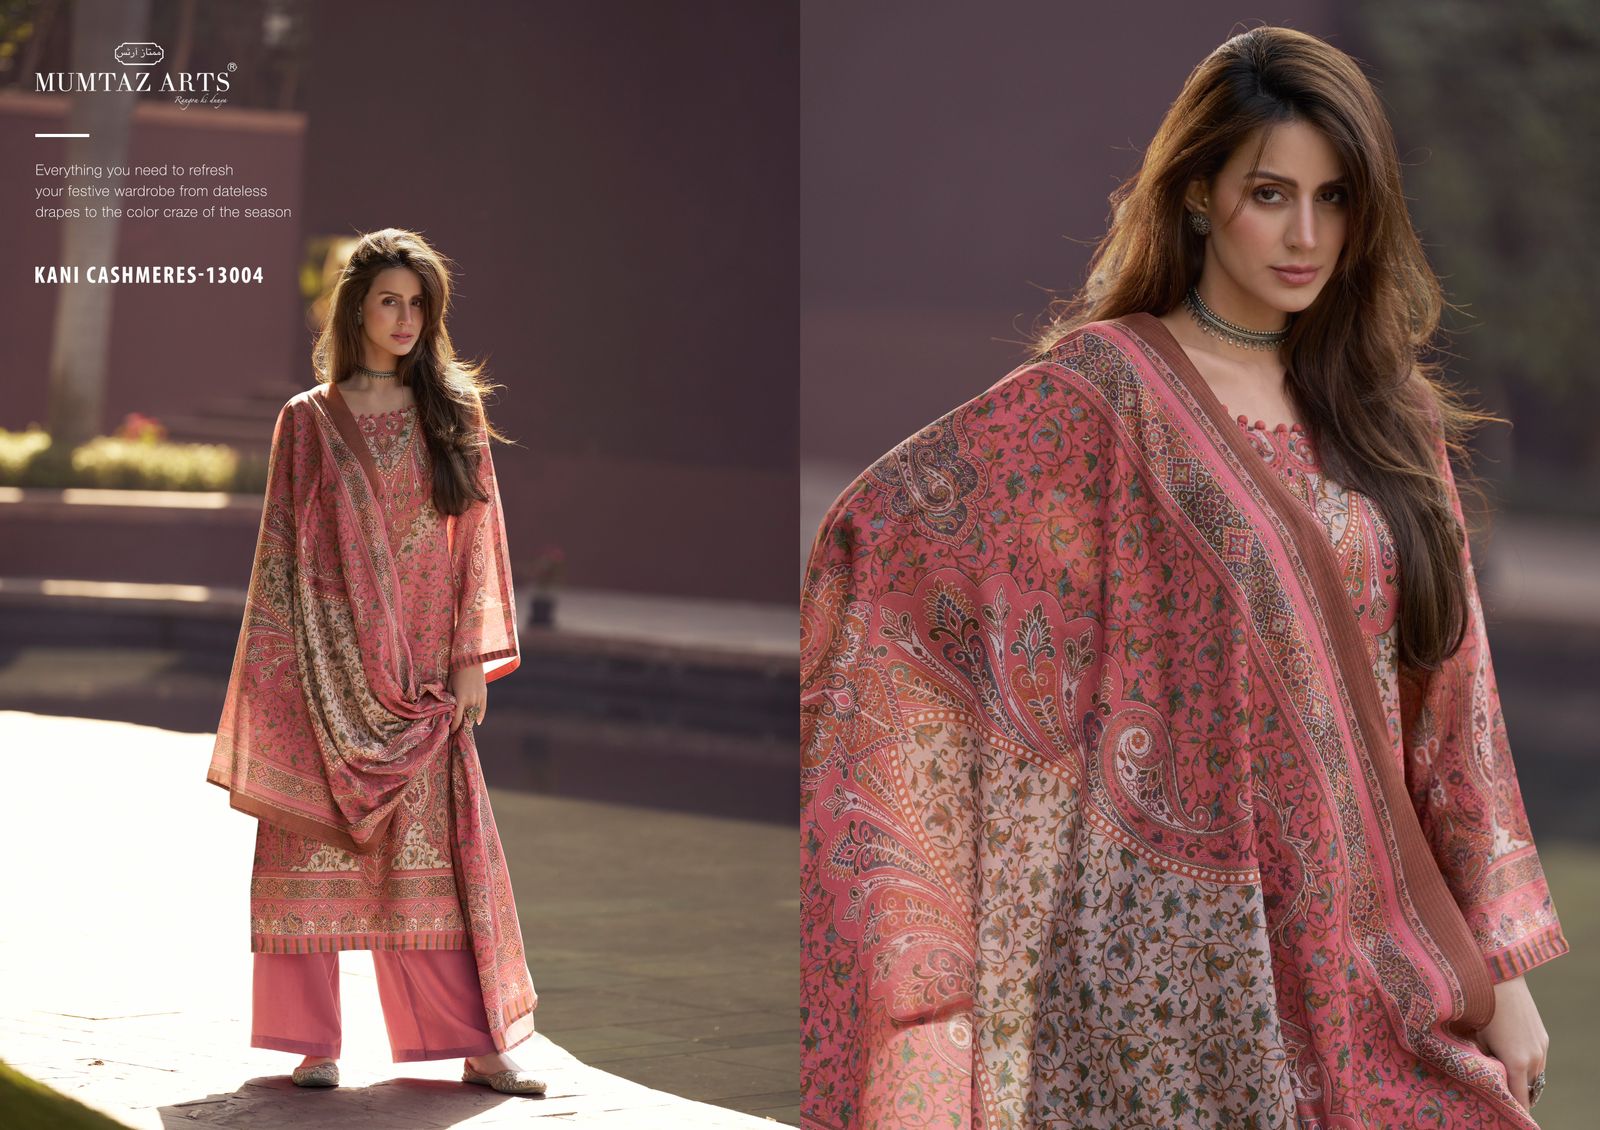 Mumtaz Arts Kani Cashmeres Vol 2 Lawn Cotton Digital Printed Dress Material Latest Collection